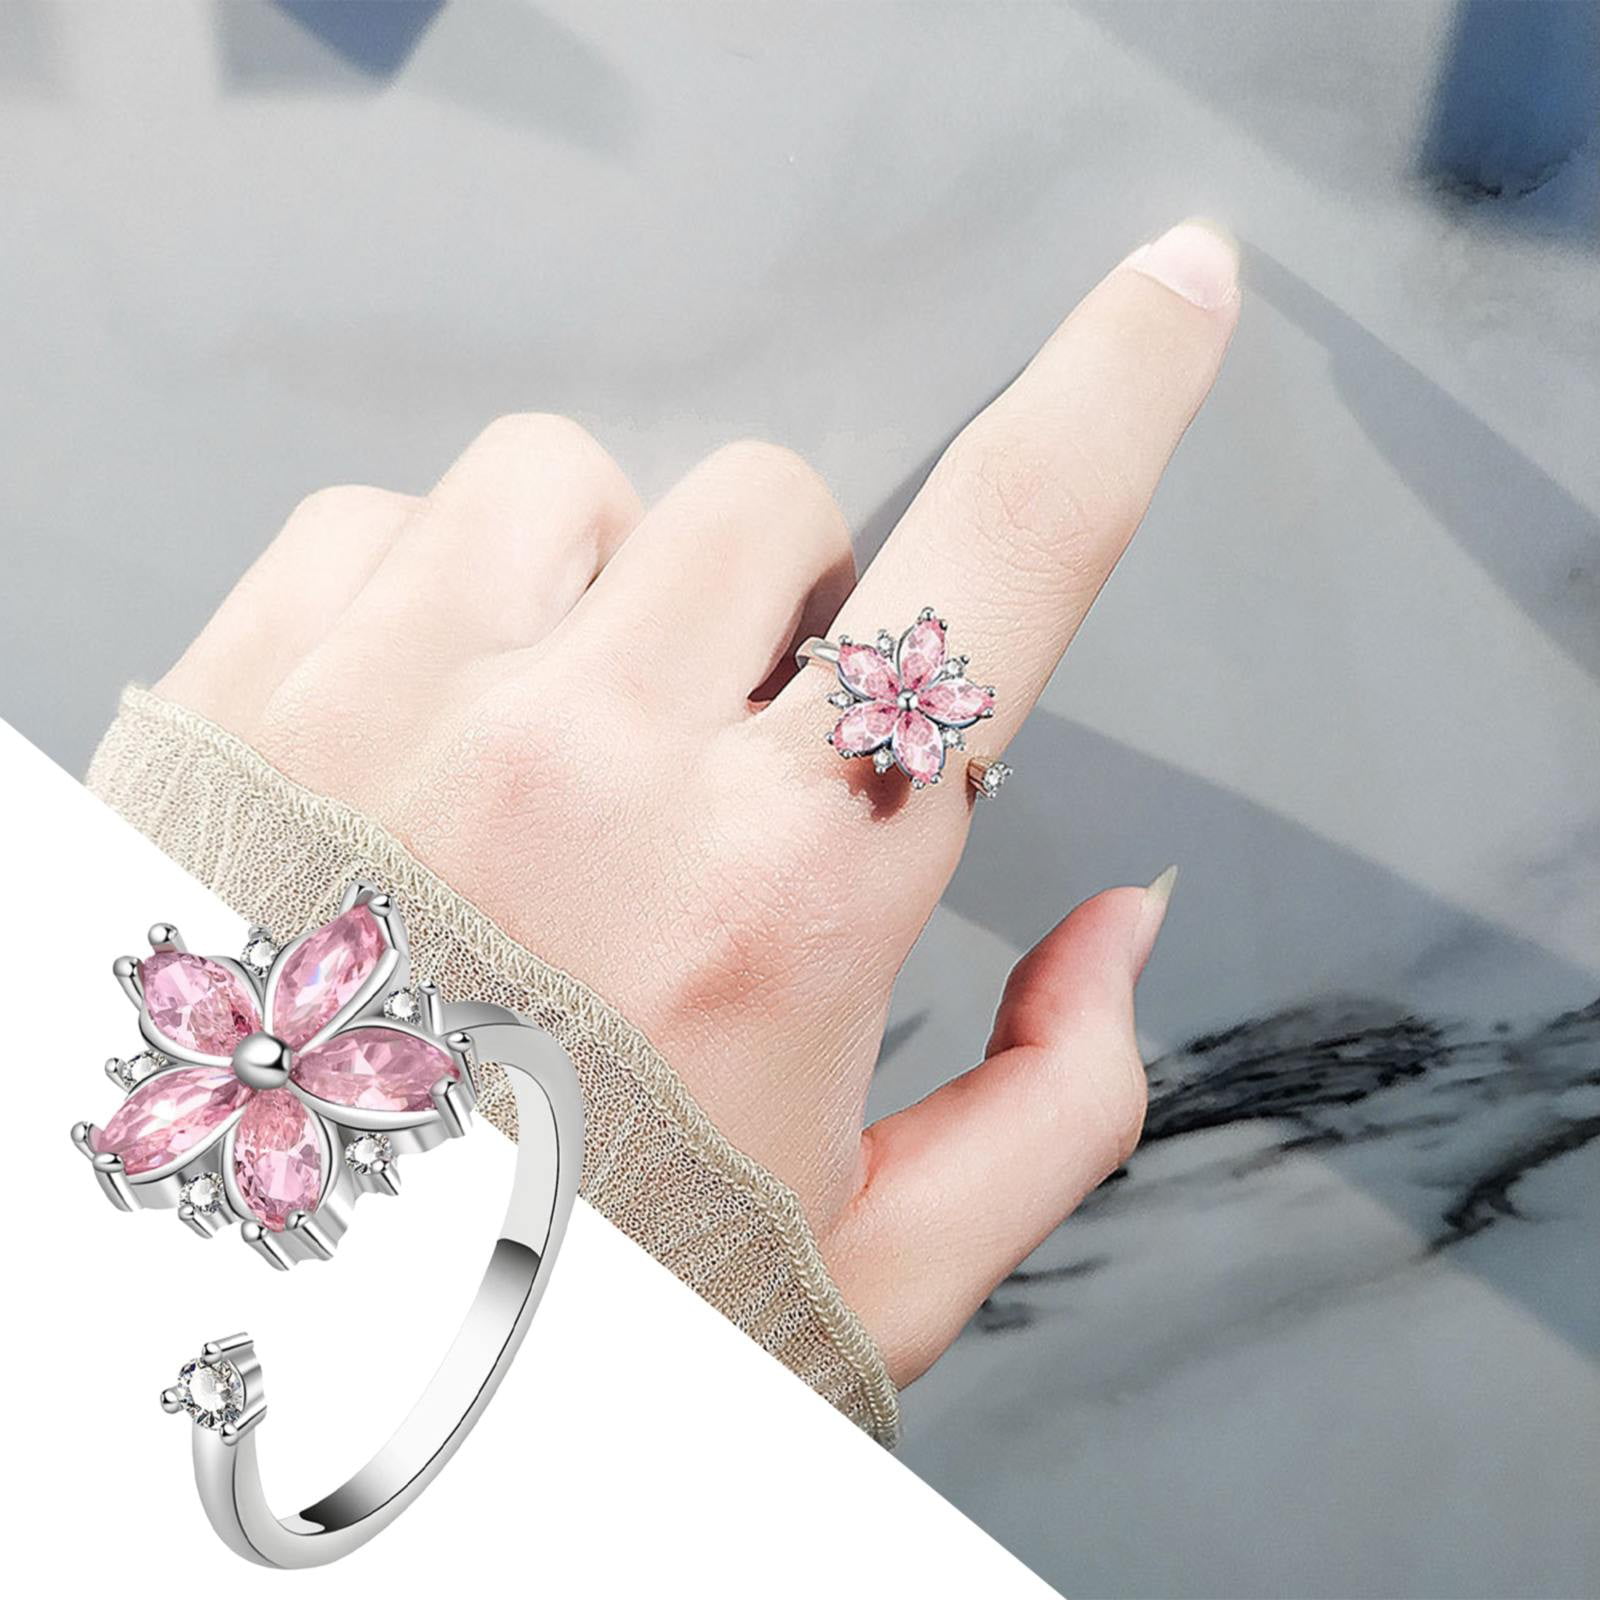 Buy EVRAB Four Season Ring Spring Trendy Korean Imitation Jewellery for  Women & girls (Pink) at Amazon.in